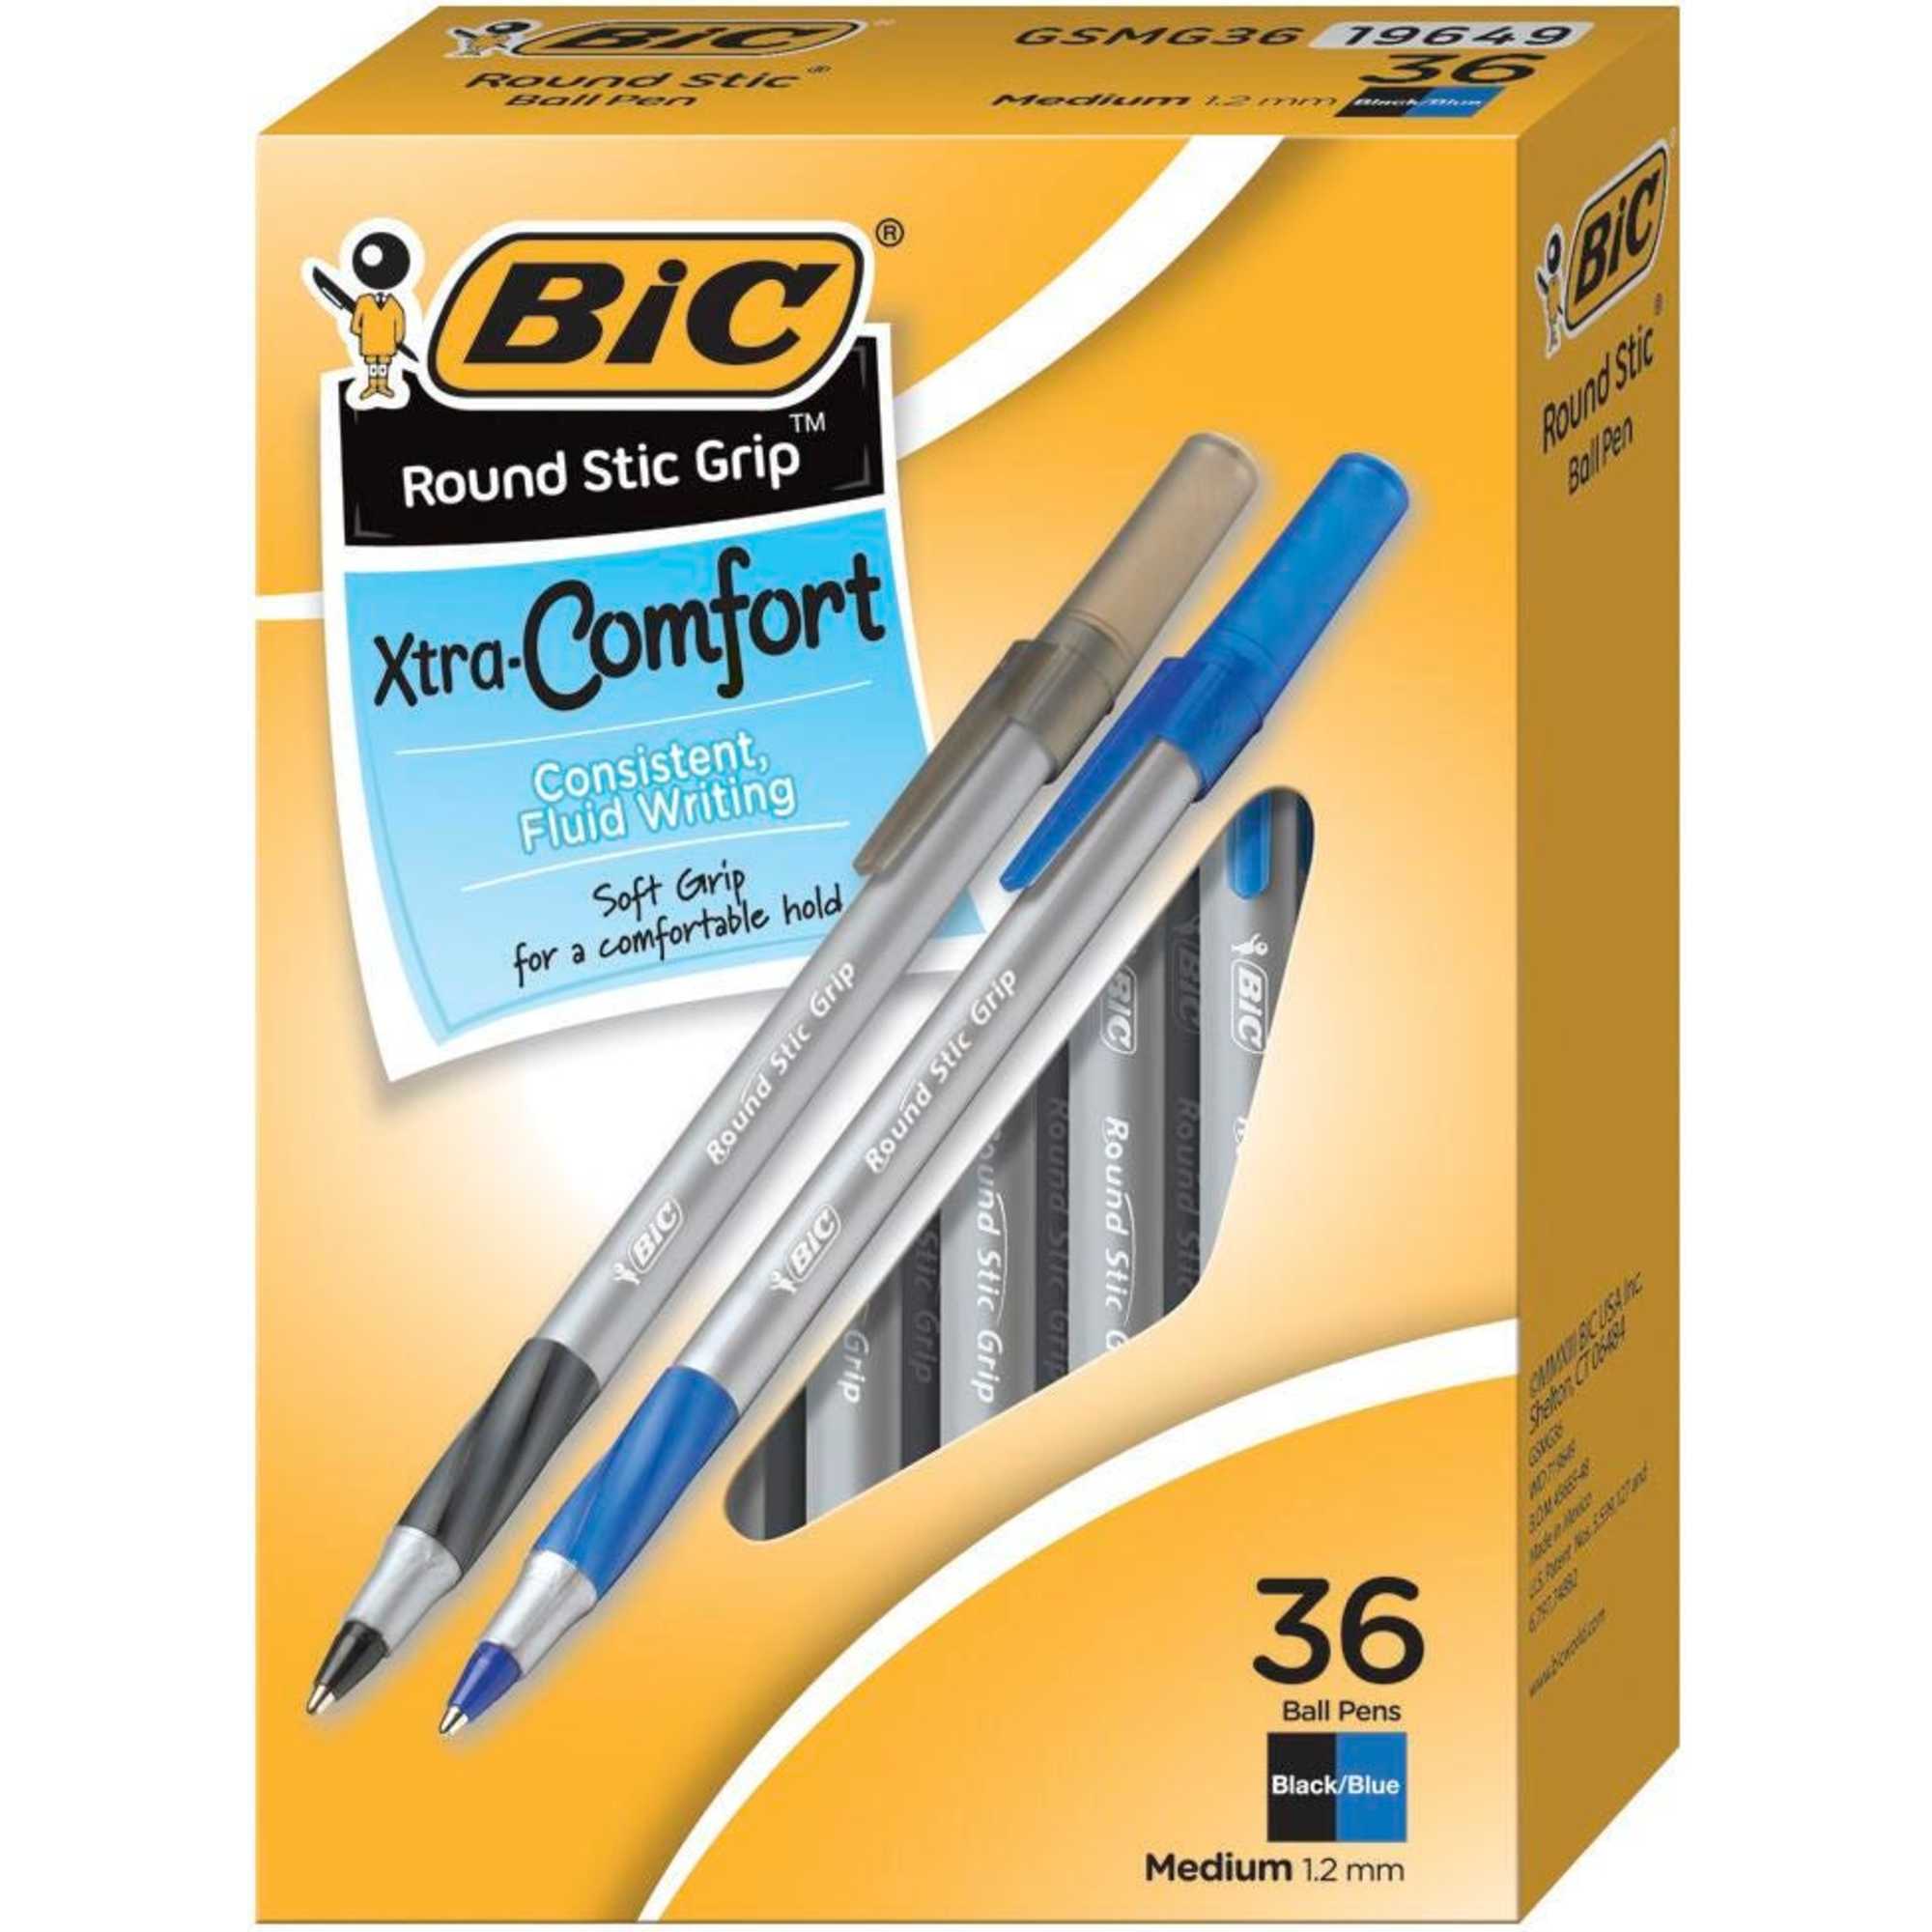 BIC Round Stic Grip Ballpoint Pen, 1.2 mm Medium Tip, Black/Blue, Pack of 36 - image 1 of 8